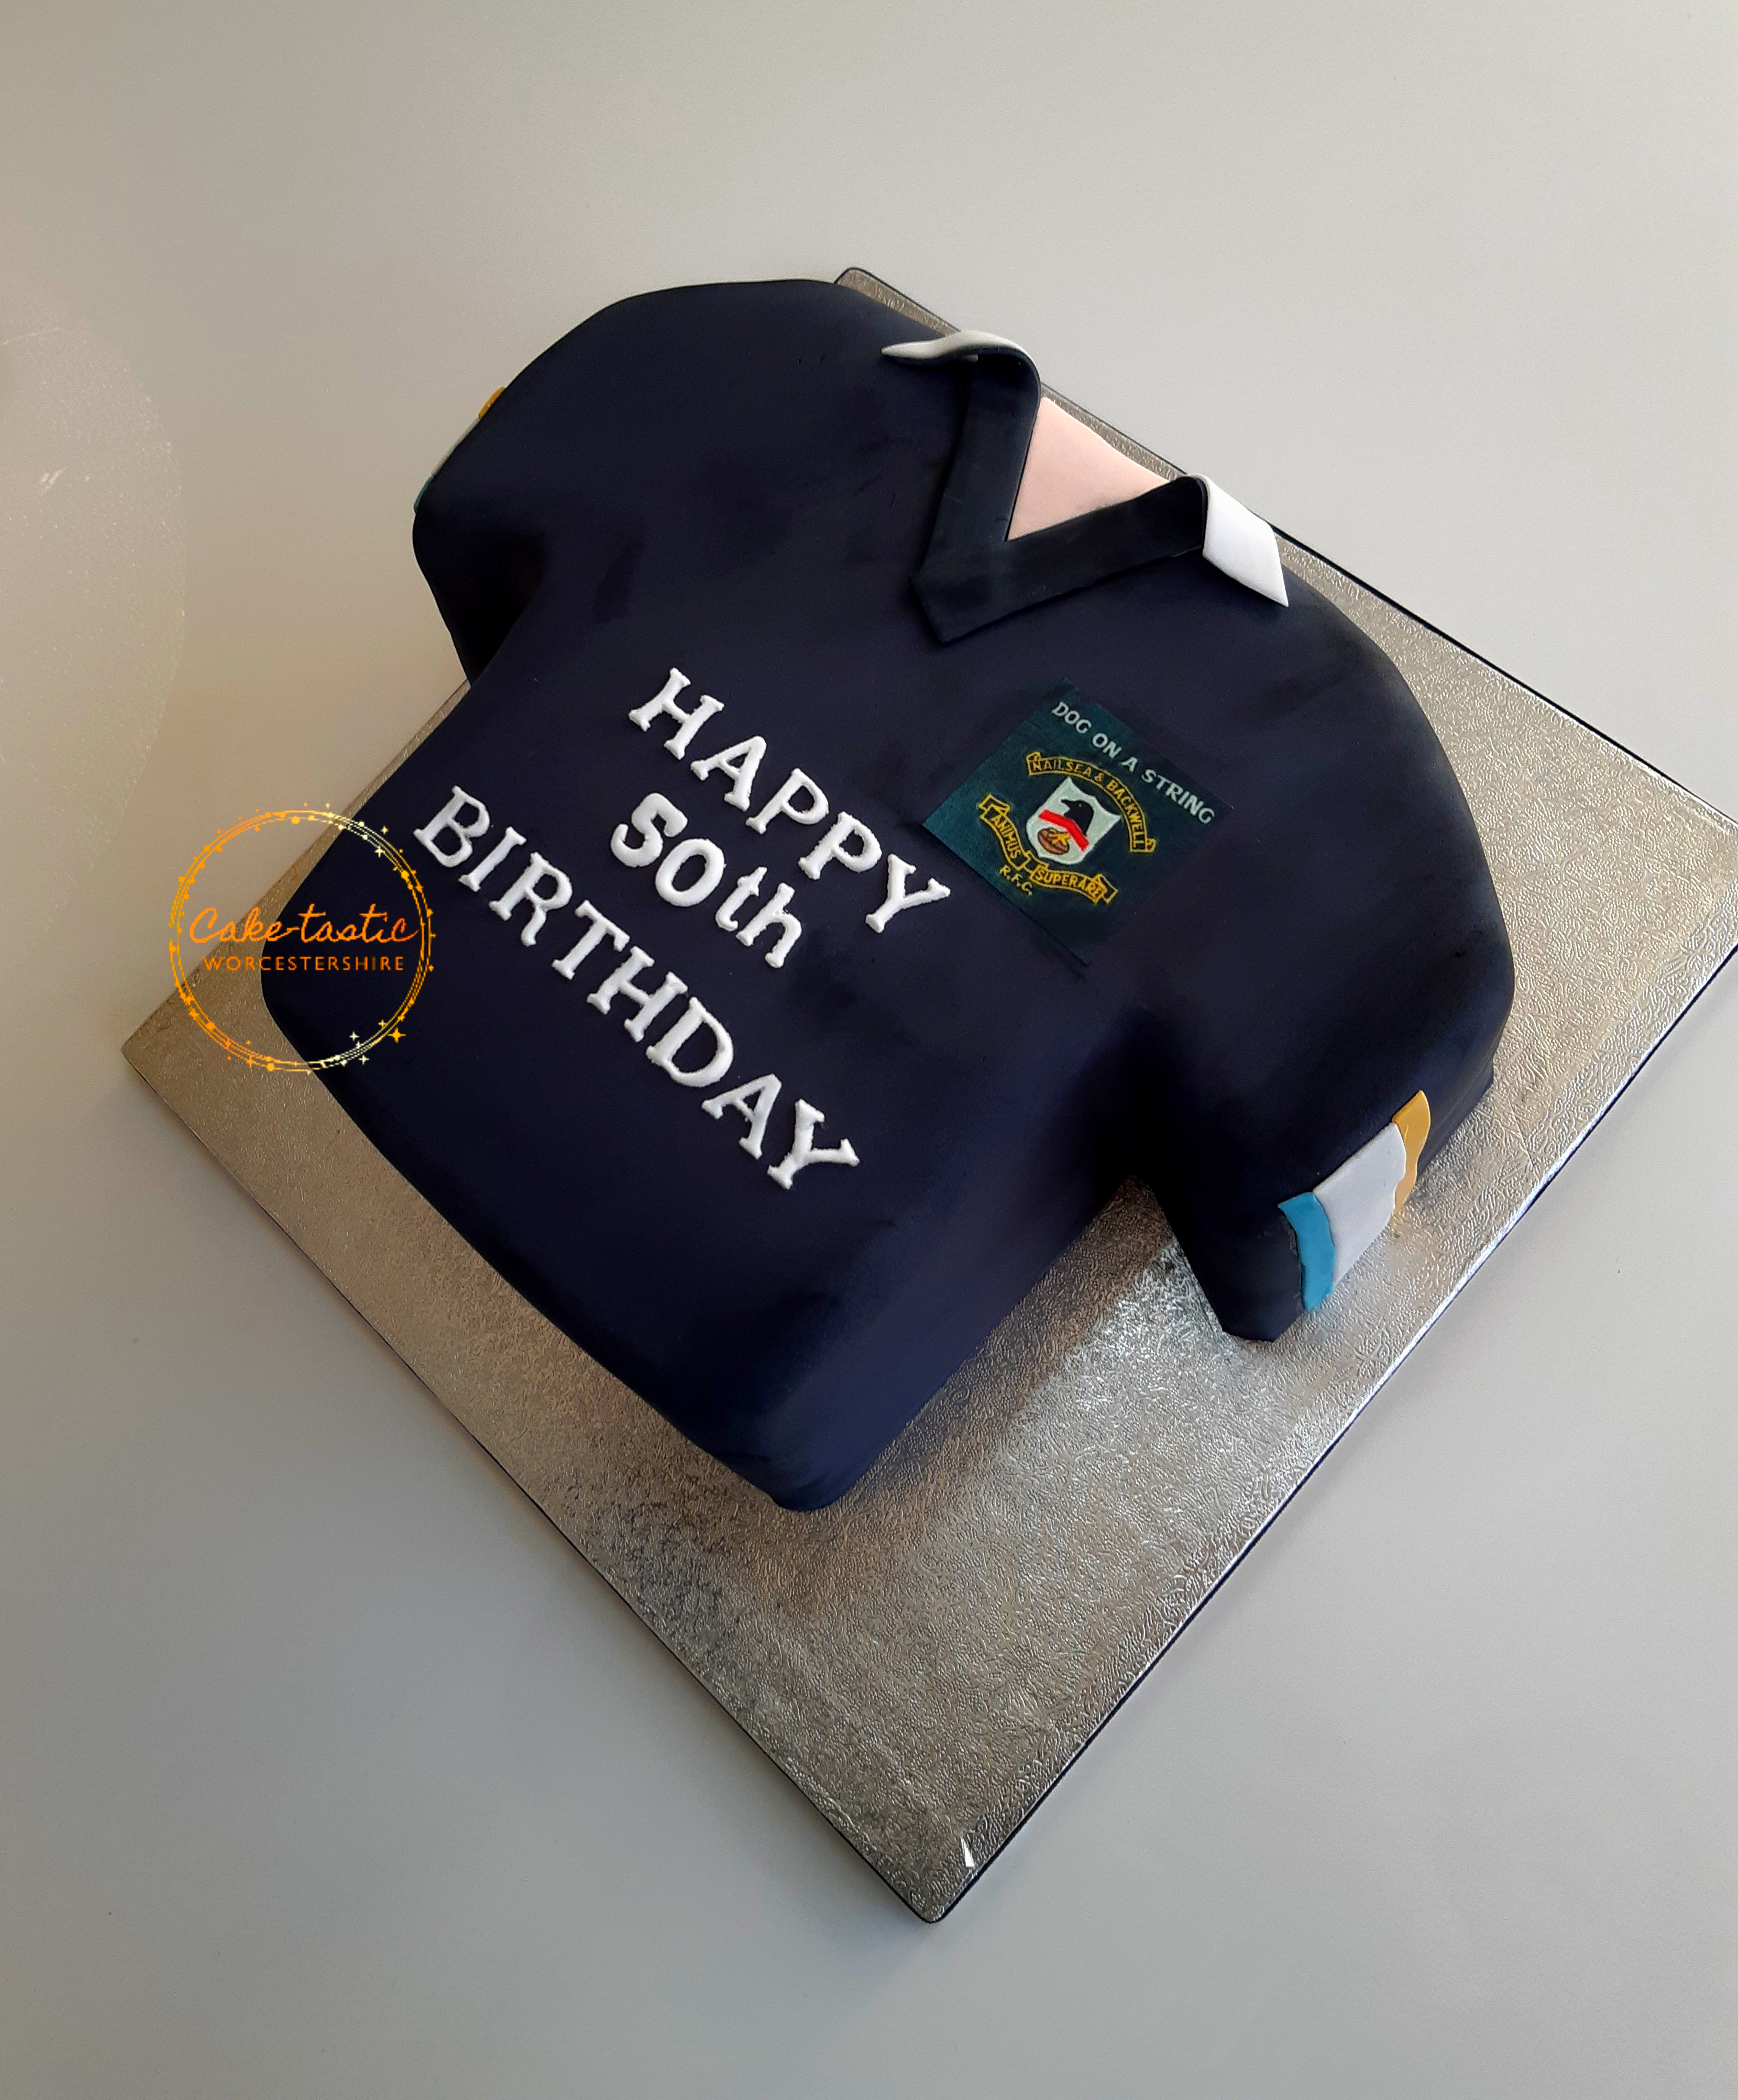 Rugby Shirt Cake